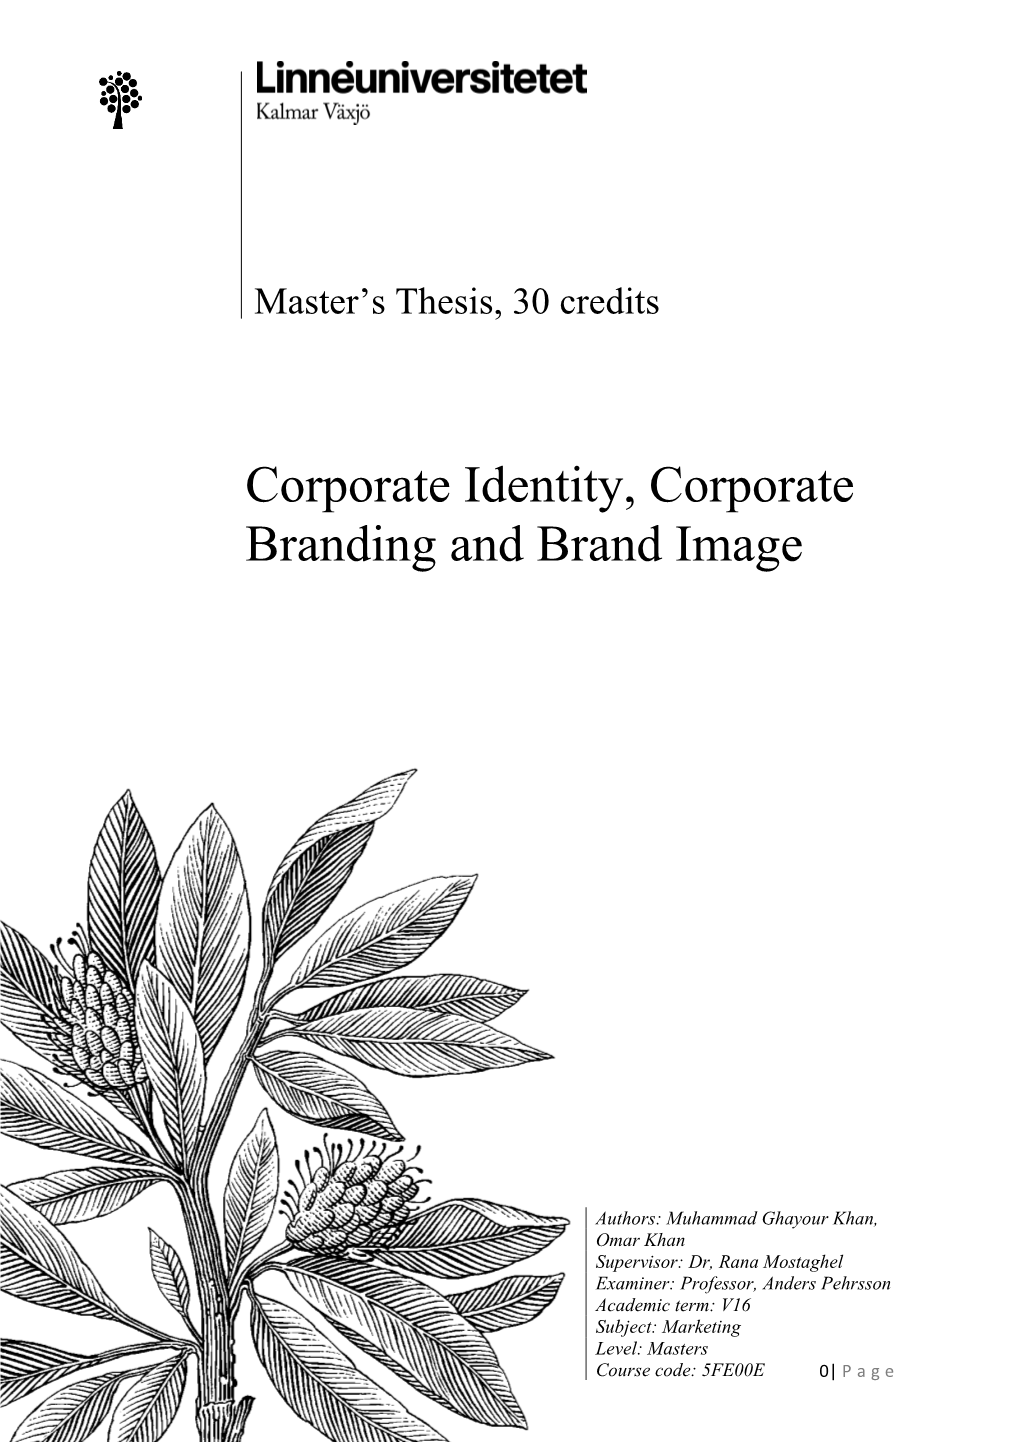 Corporate Identity & Corporate Branding